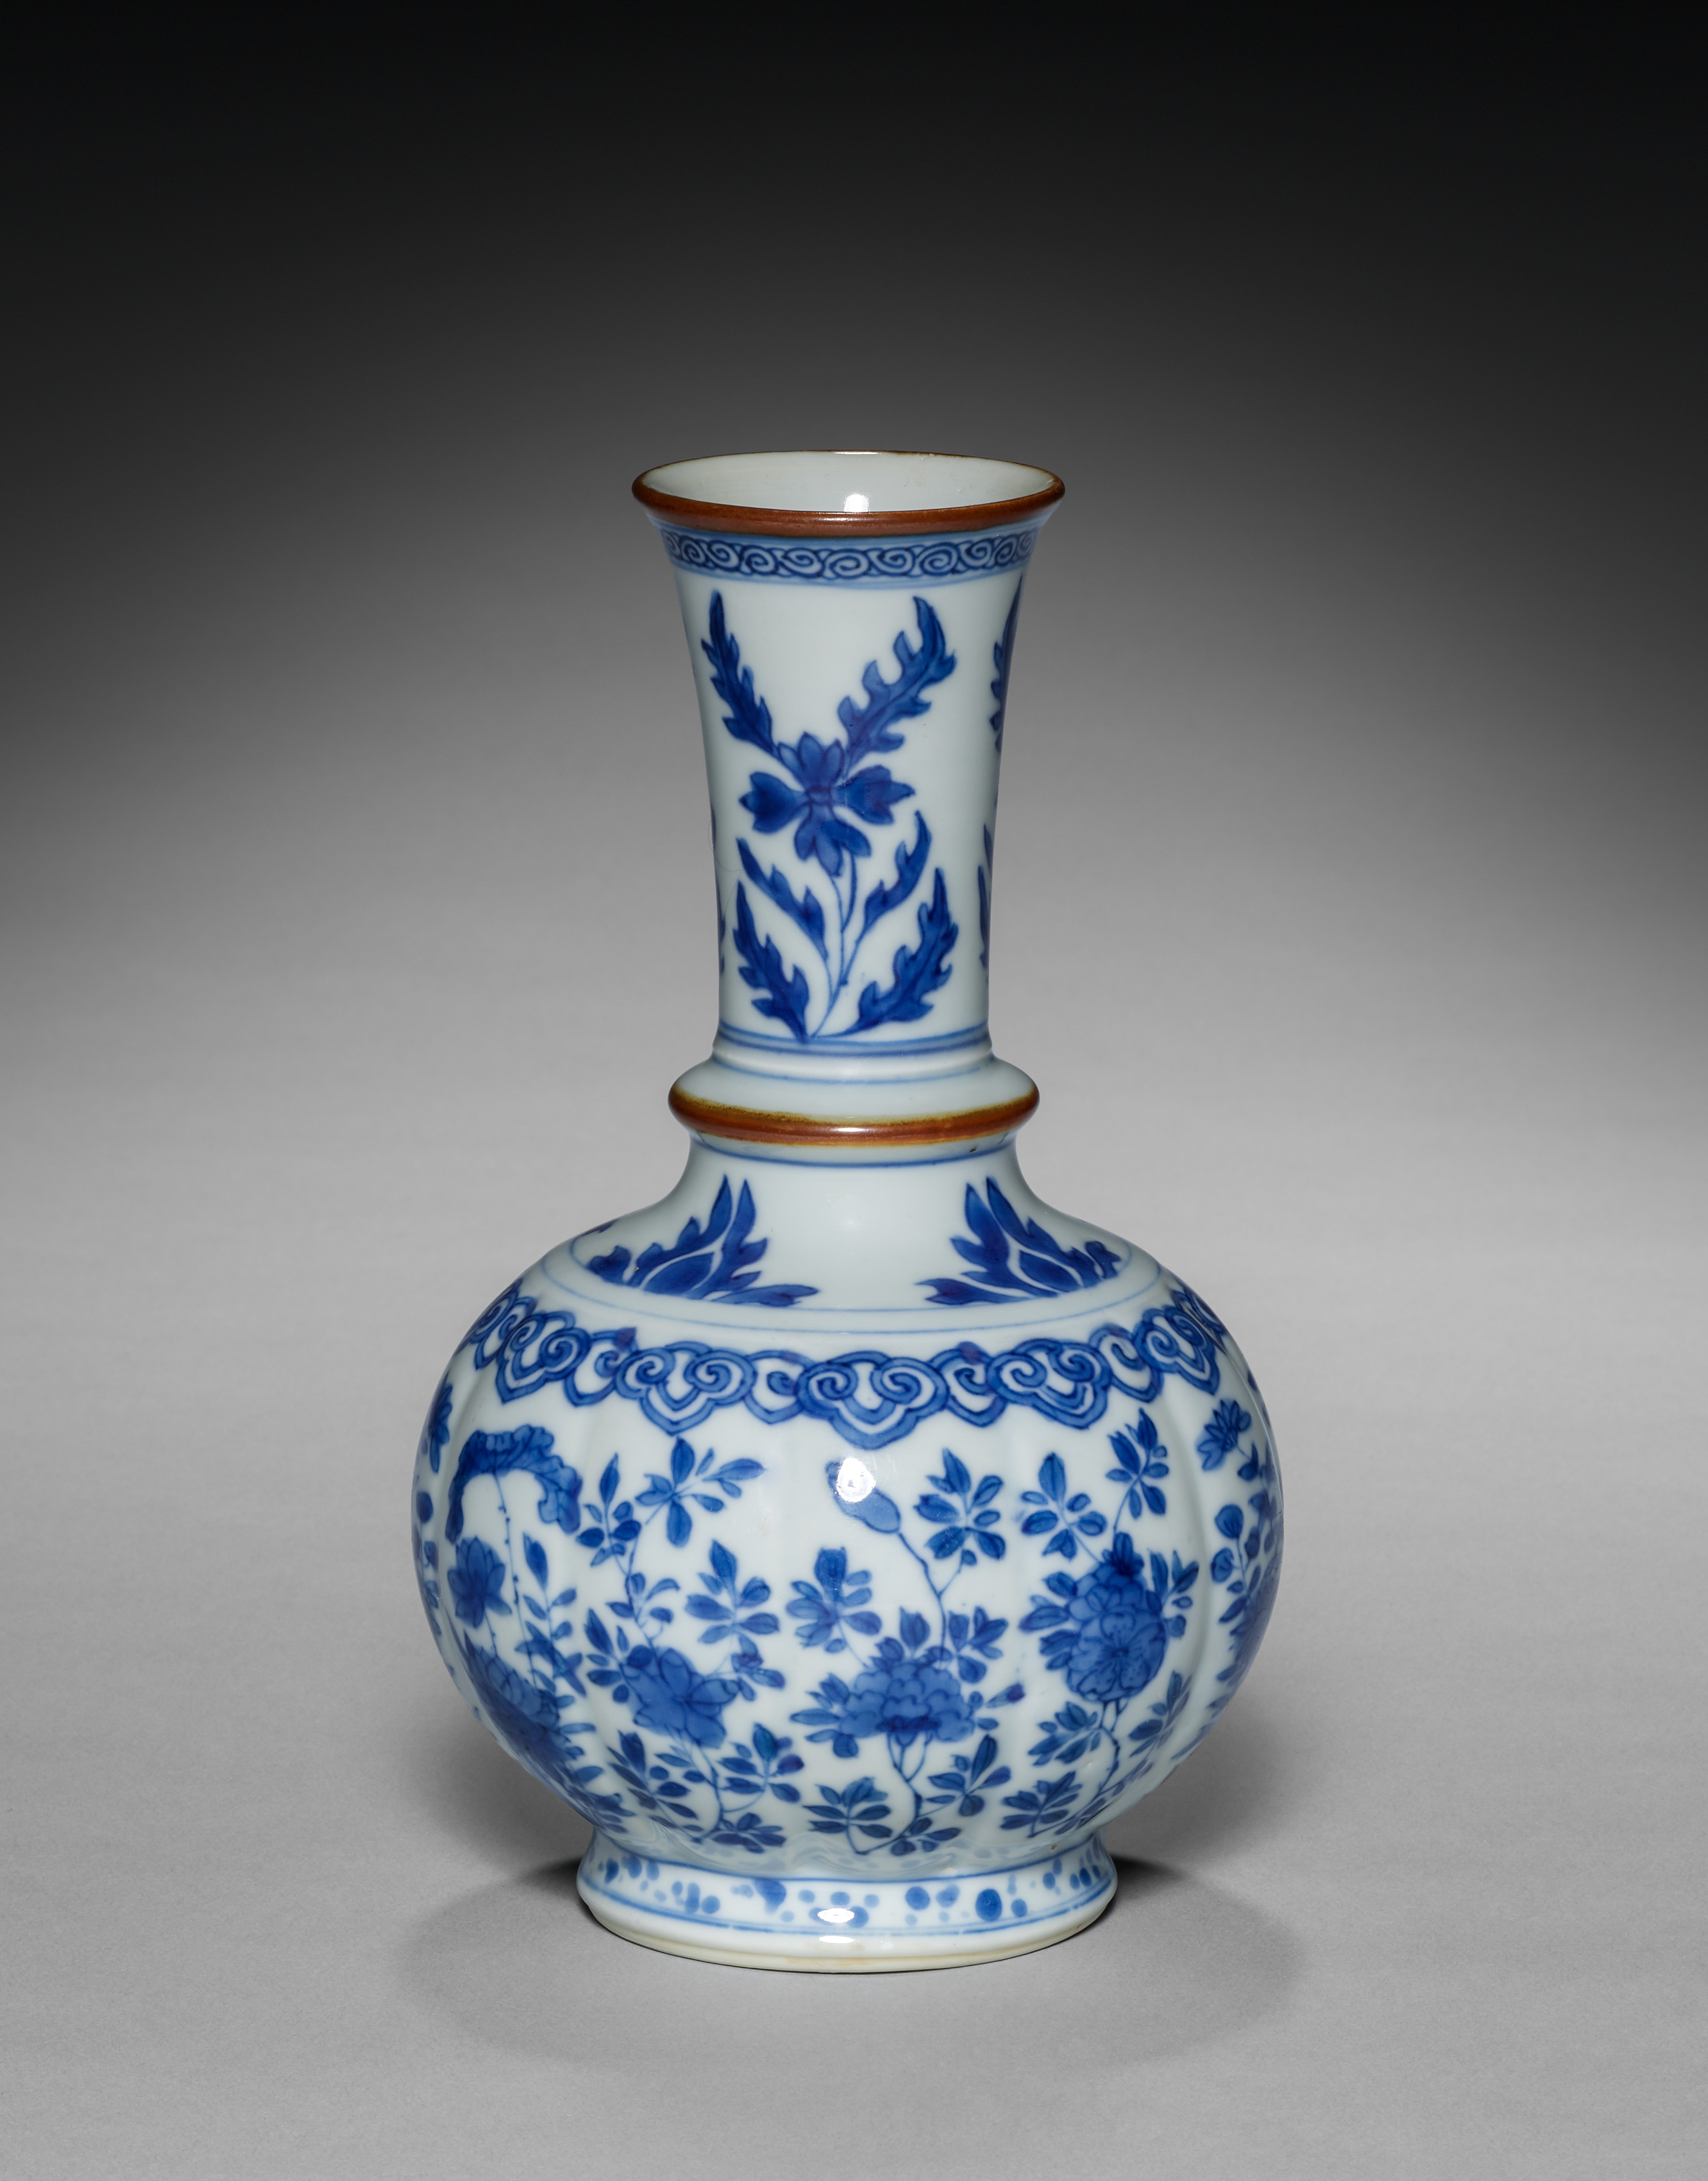 Lobed vase with underglaze cobalt blue decoration